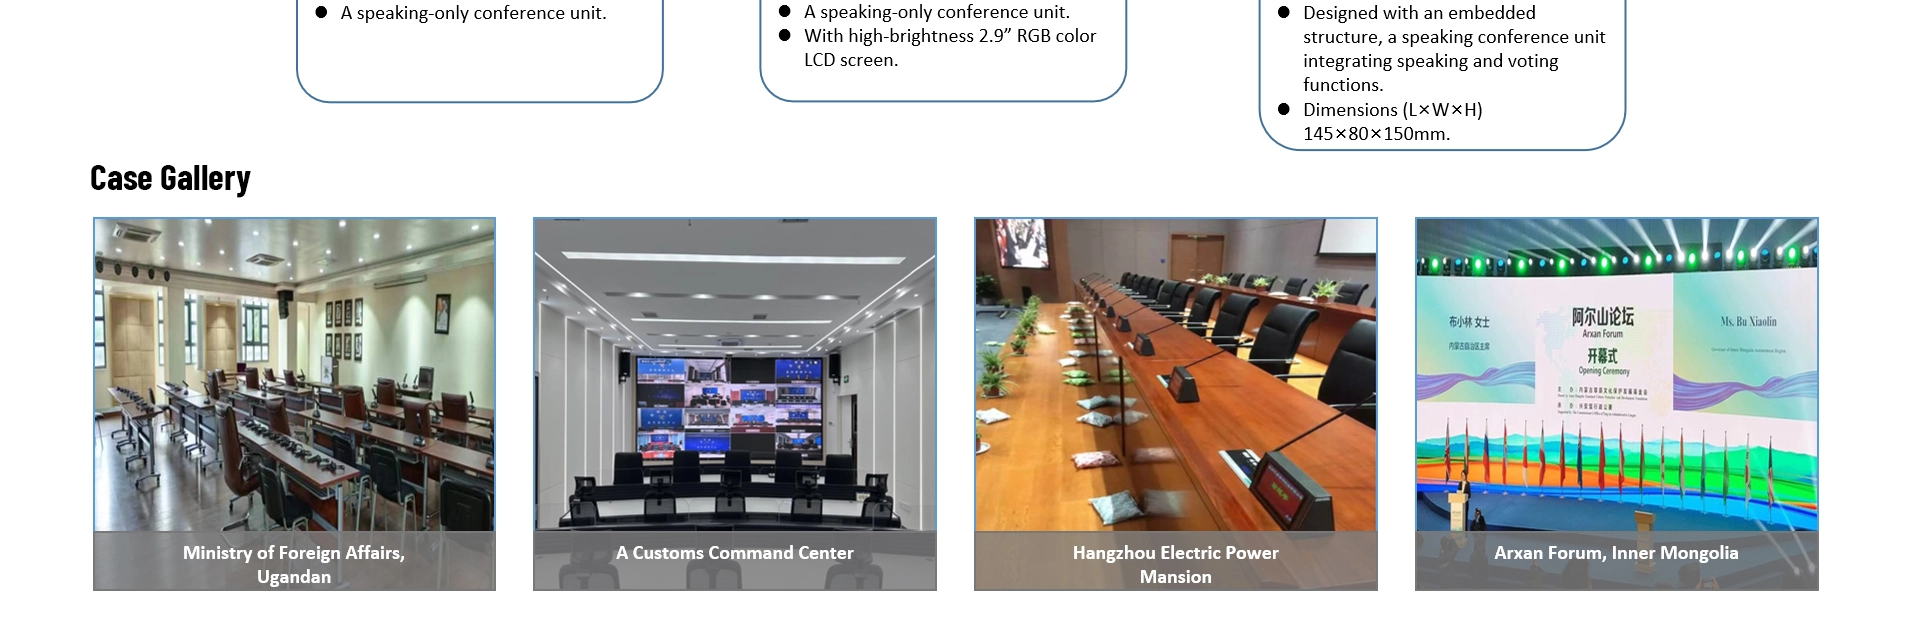 Full Digital Conference System Controller